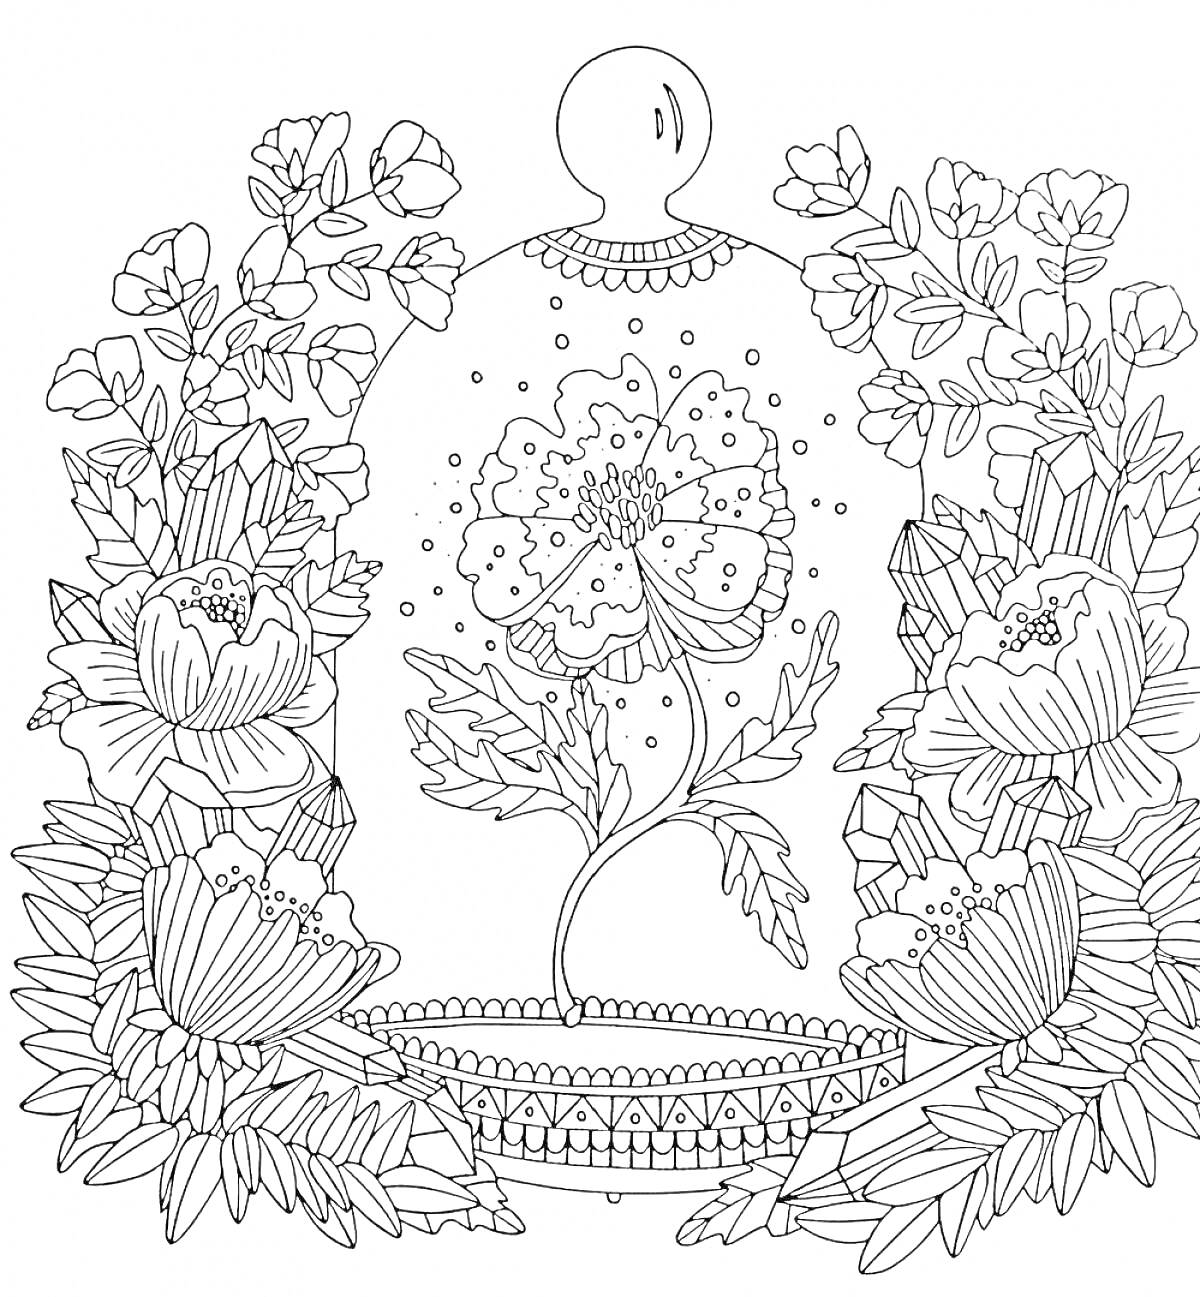 Раскраска бутылка с цветком внутри, окружённая цветами